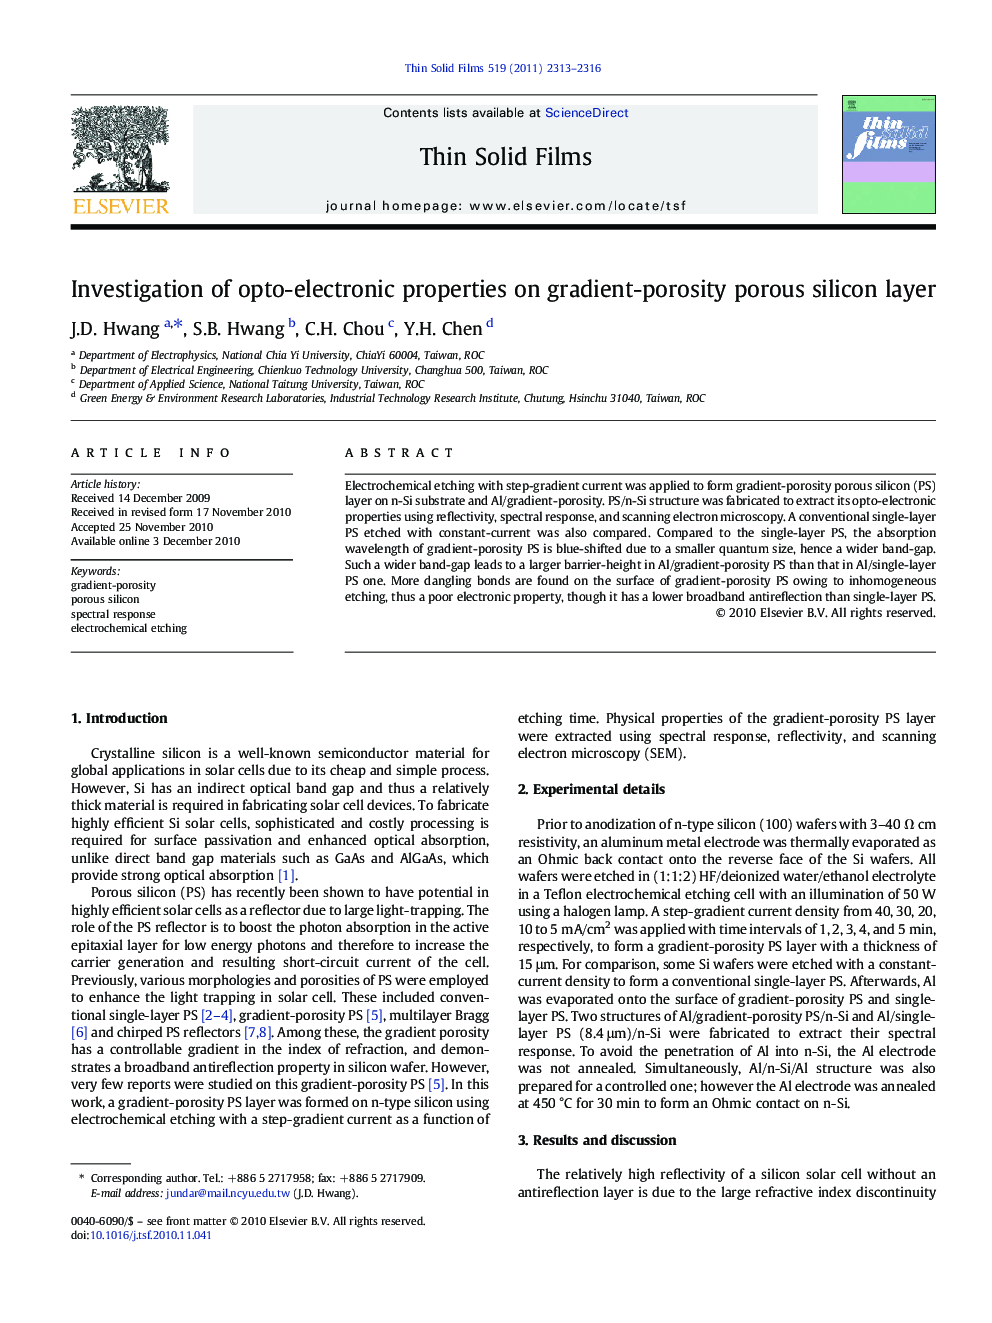 Investigation of opto-electronic properties on gradient-porosity porous silicon layer